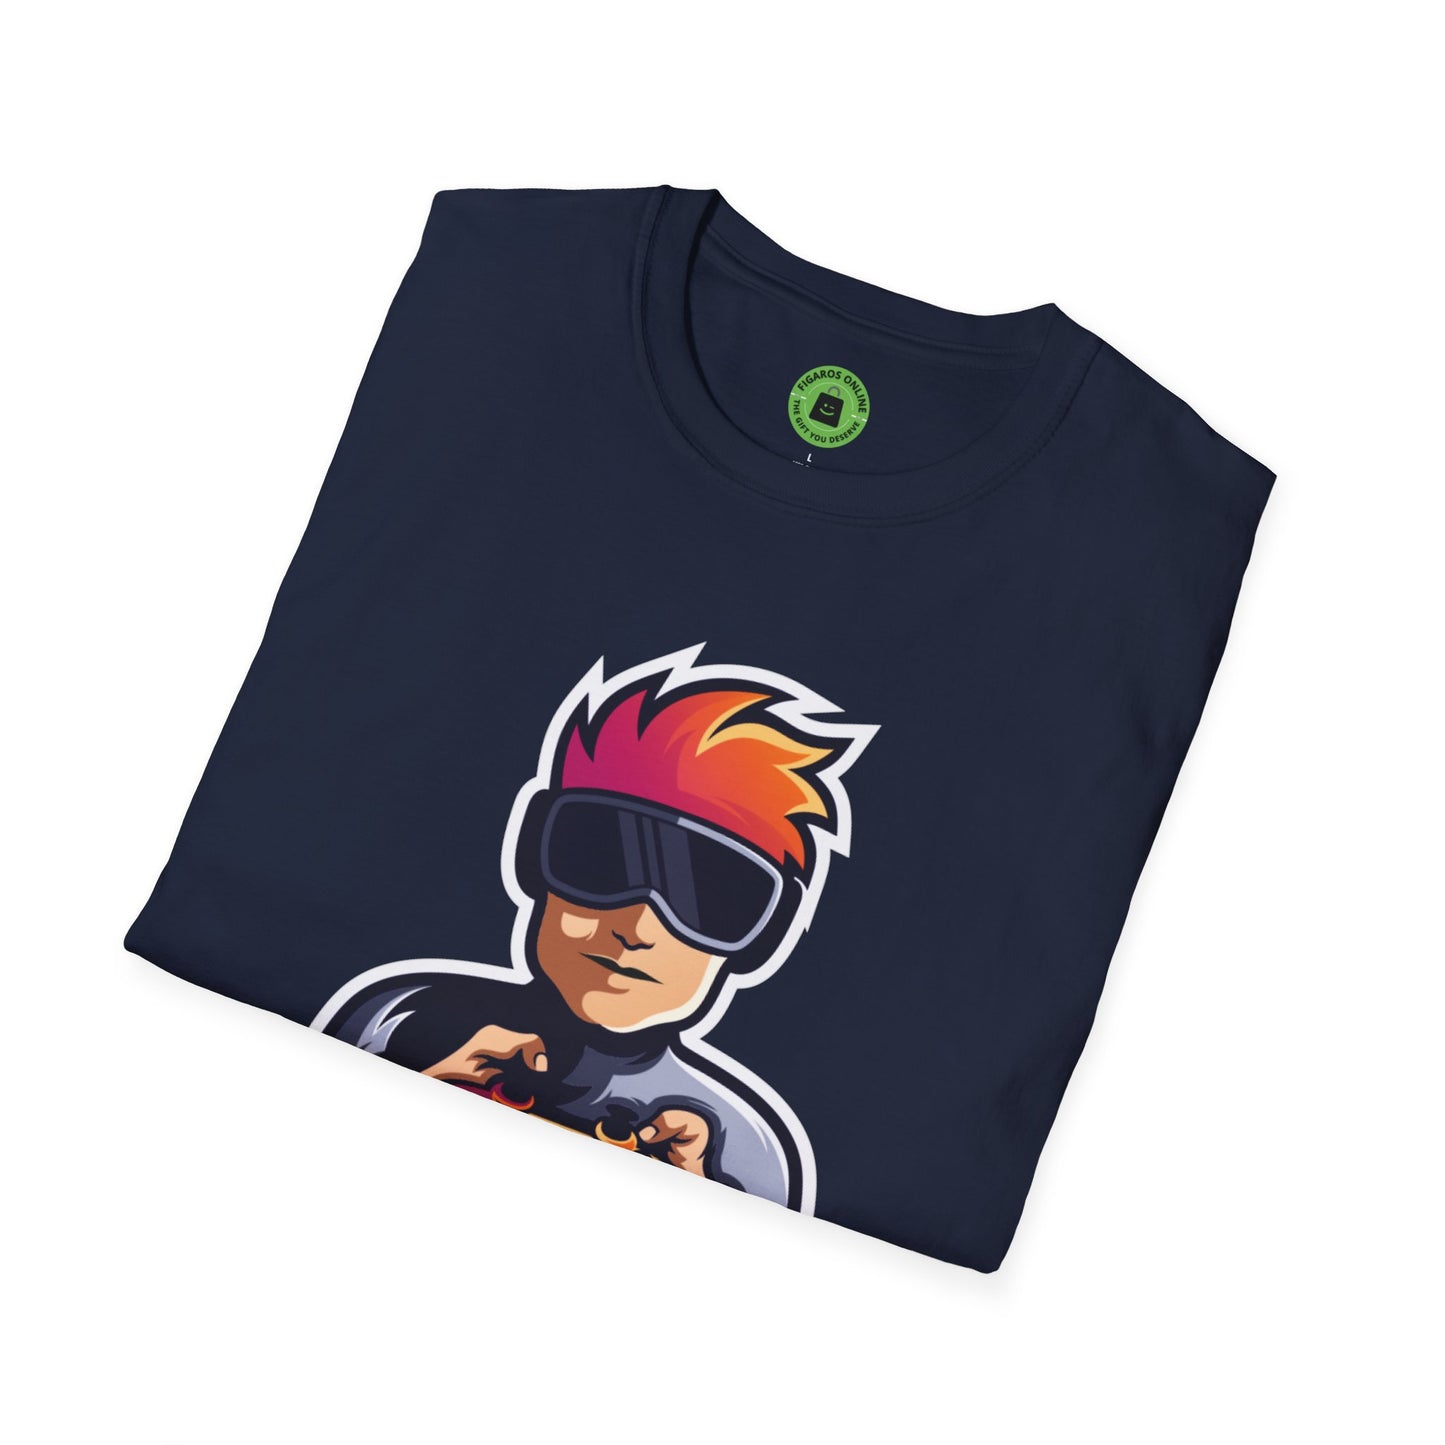 Unisex Softstyle T-Shirt - Gamer